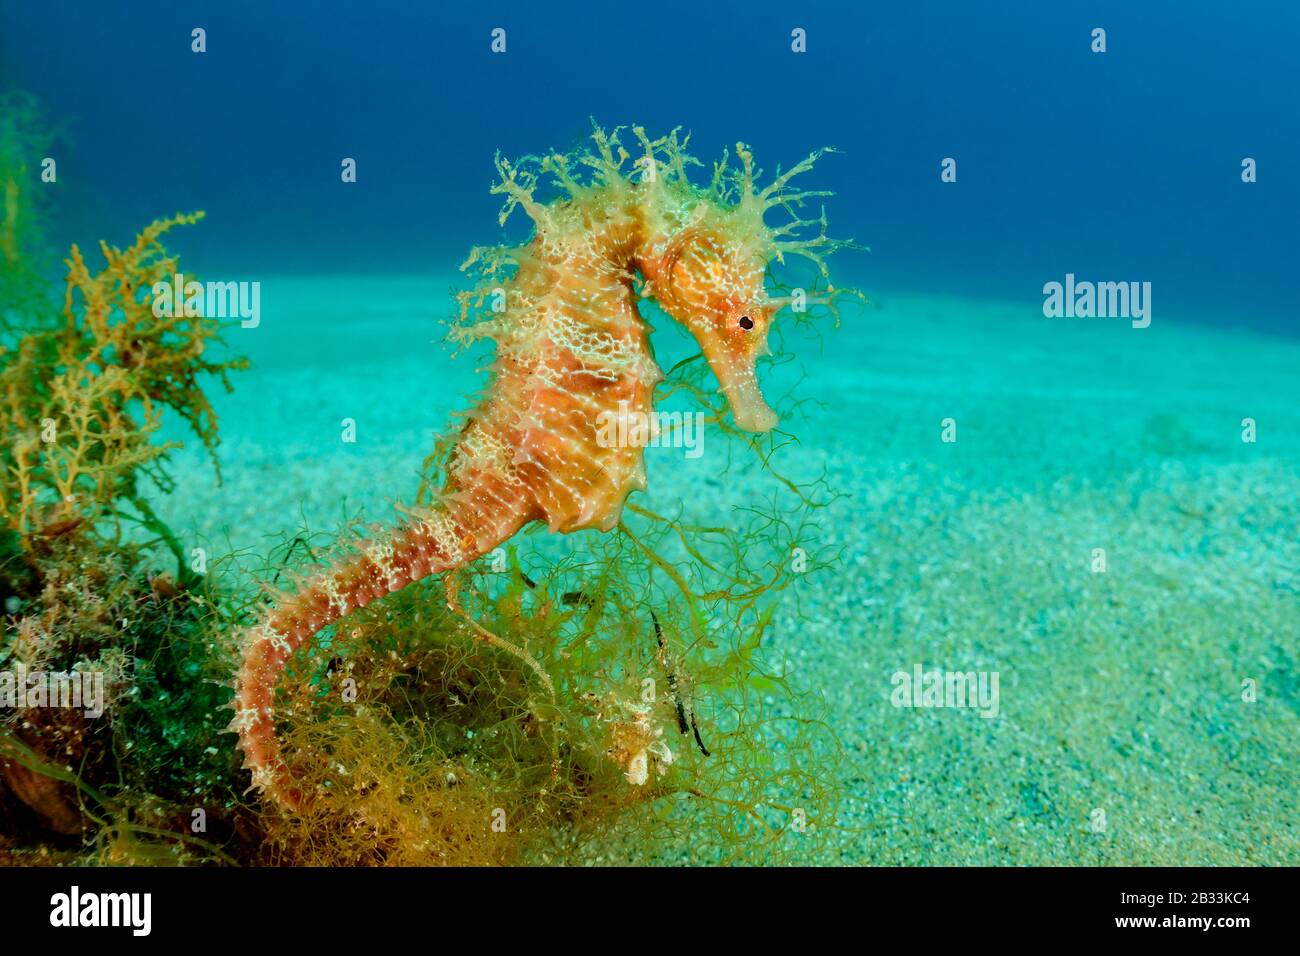 Long-snouted seahorse, Hippocampus guttulatus, Tamariu, Costa Brava, Spain, Mediterranean Sea Stock Photo